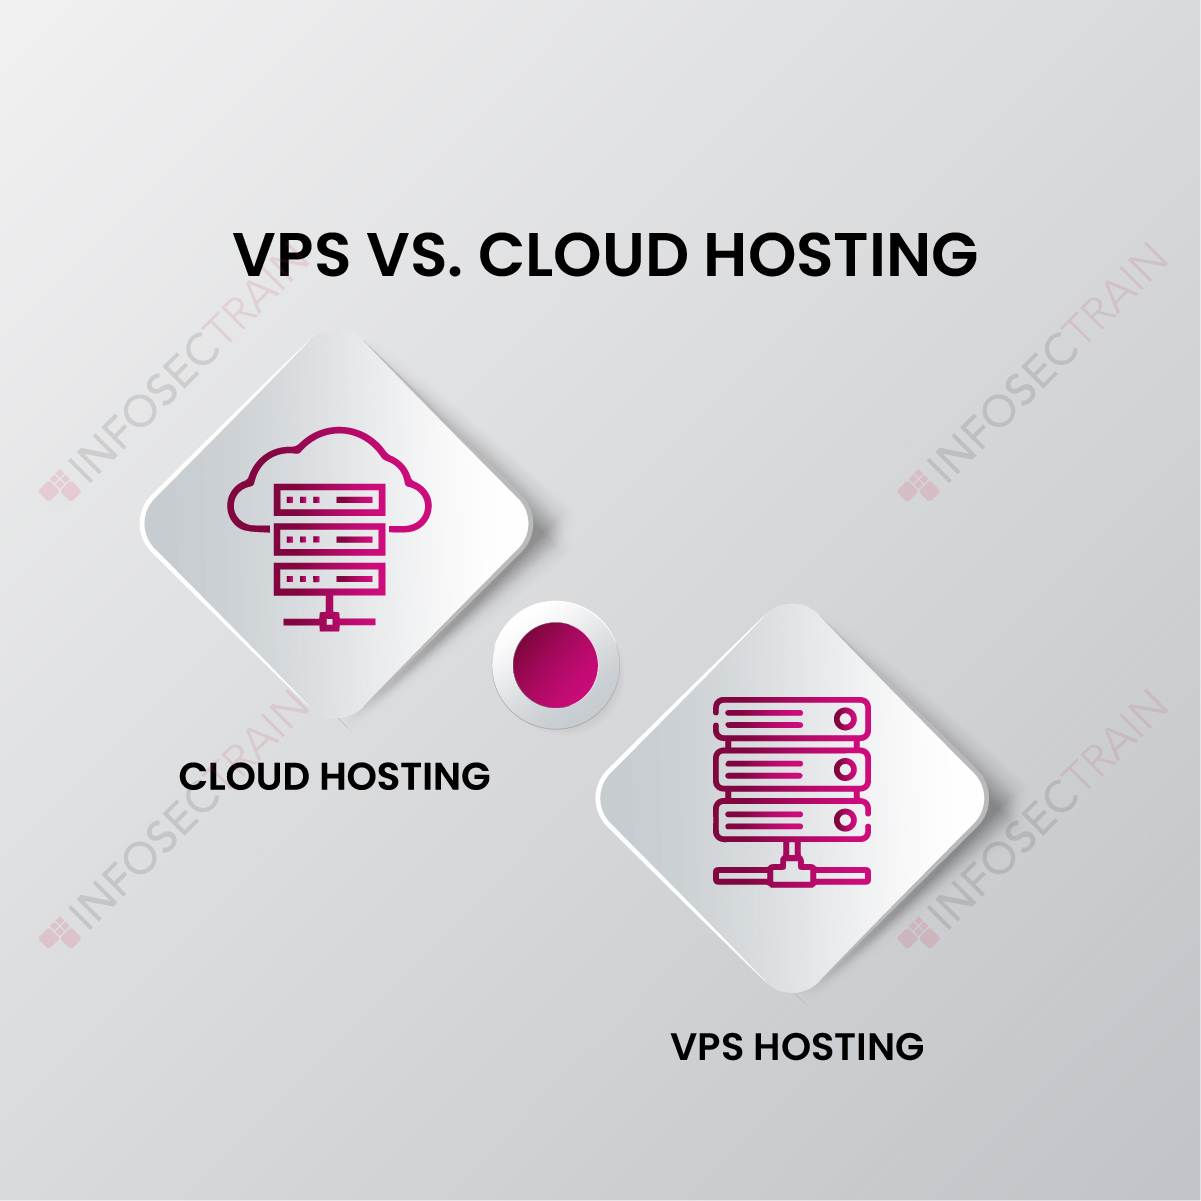 VPS vs. Cloud Hosting